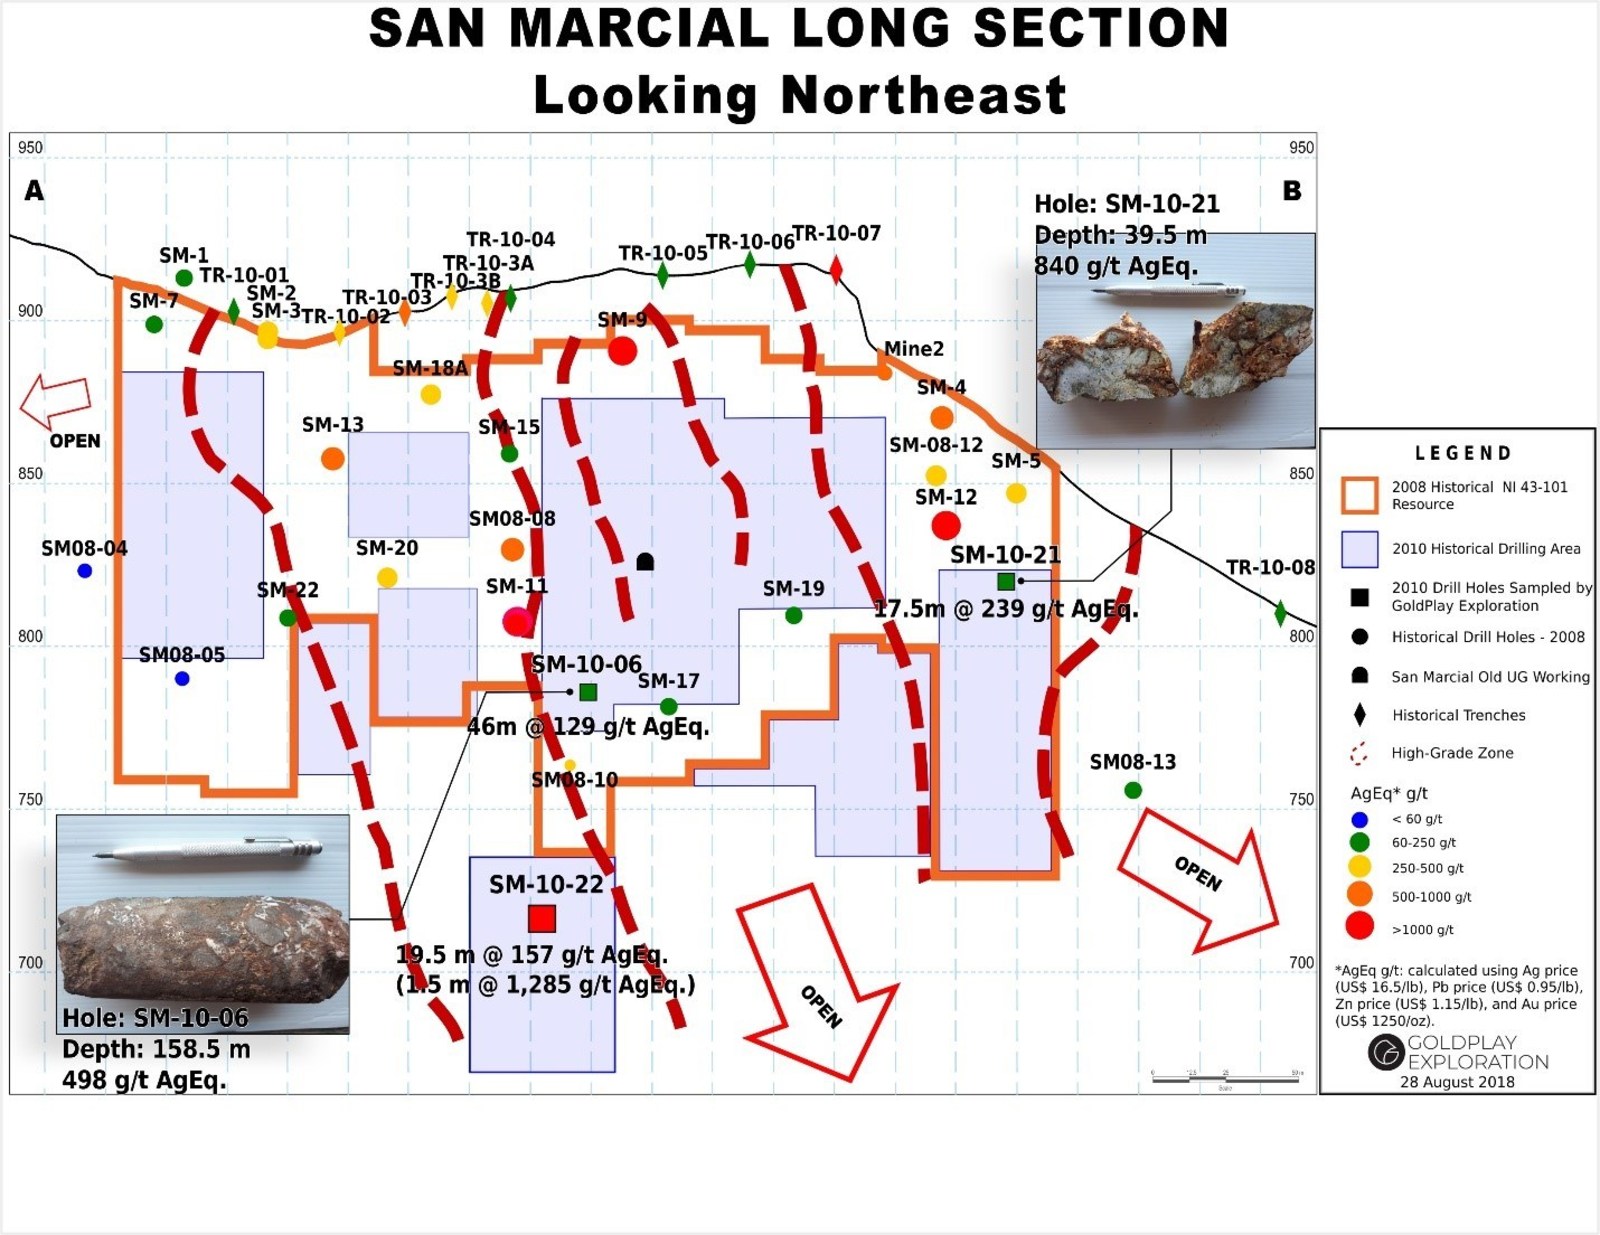 Figure 2: San Marcial Long Section